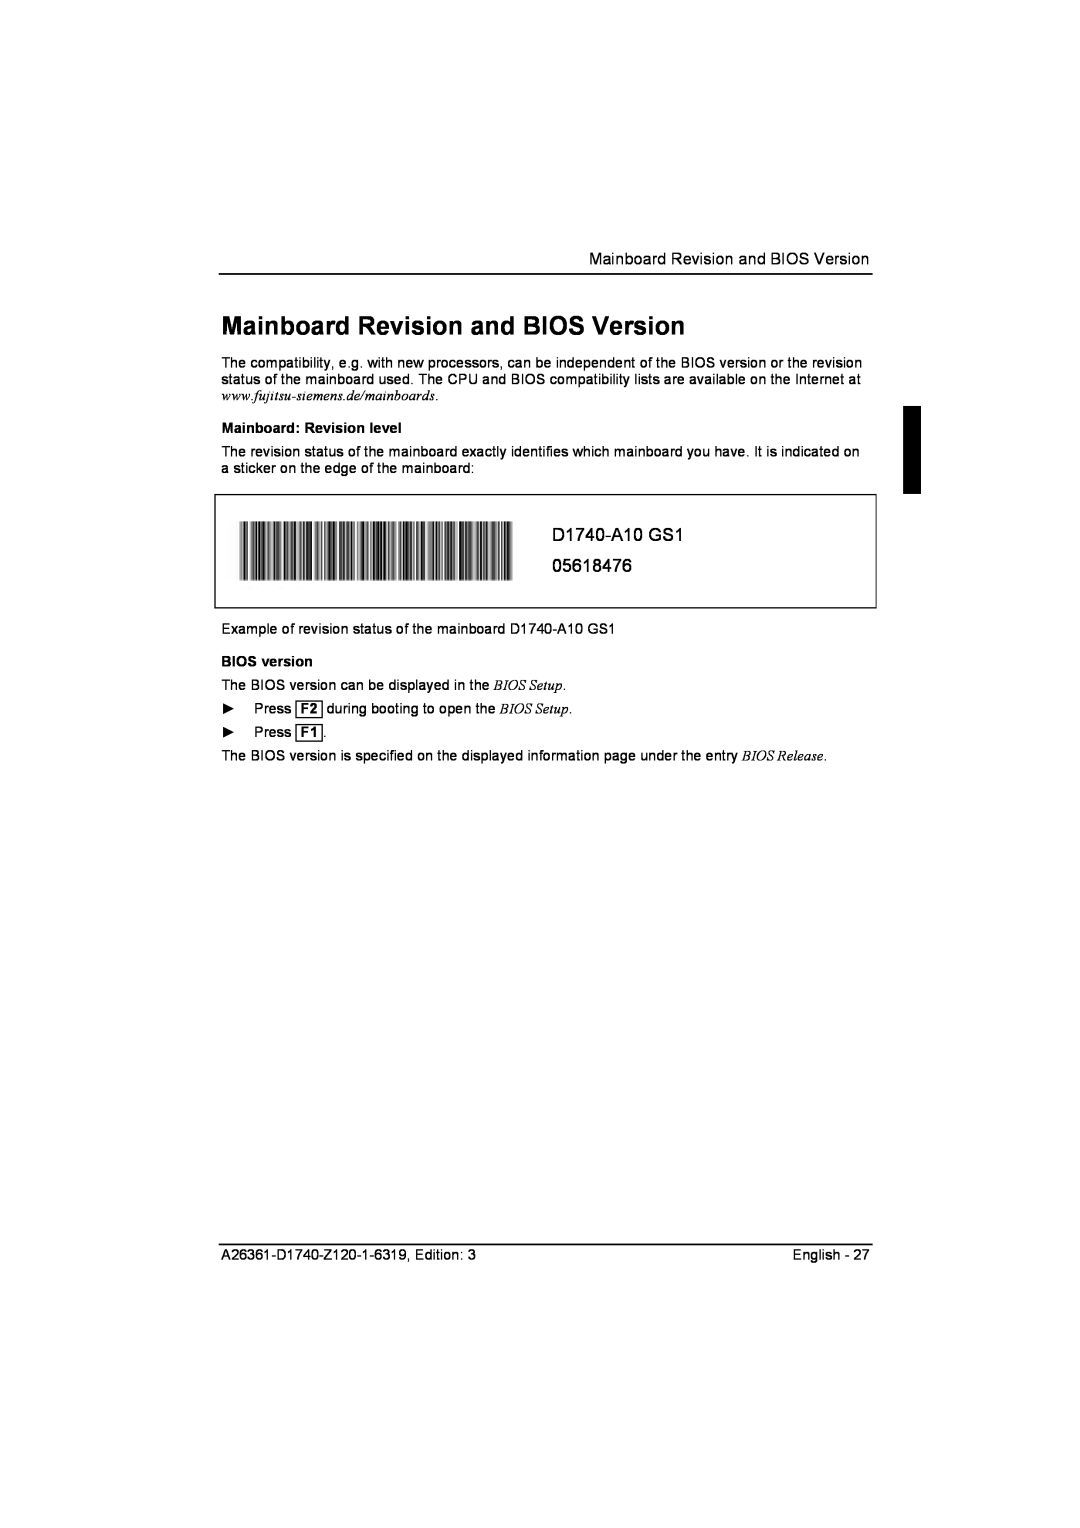 Fujitsu technical manual Mainboard Revision and BIOS Version, Mainboard Revision level, BIOS version, D1740-A10 GS1 